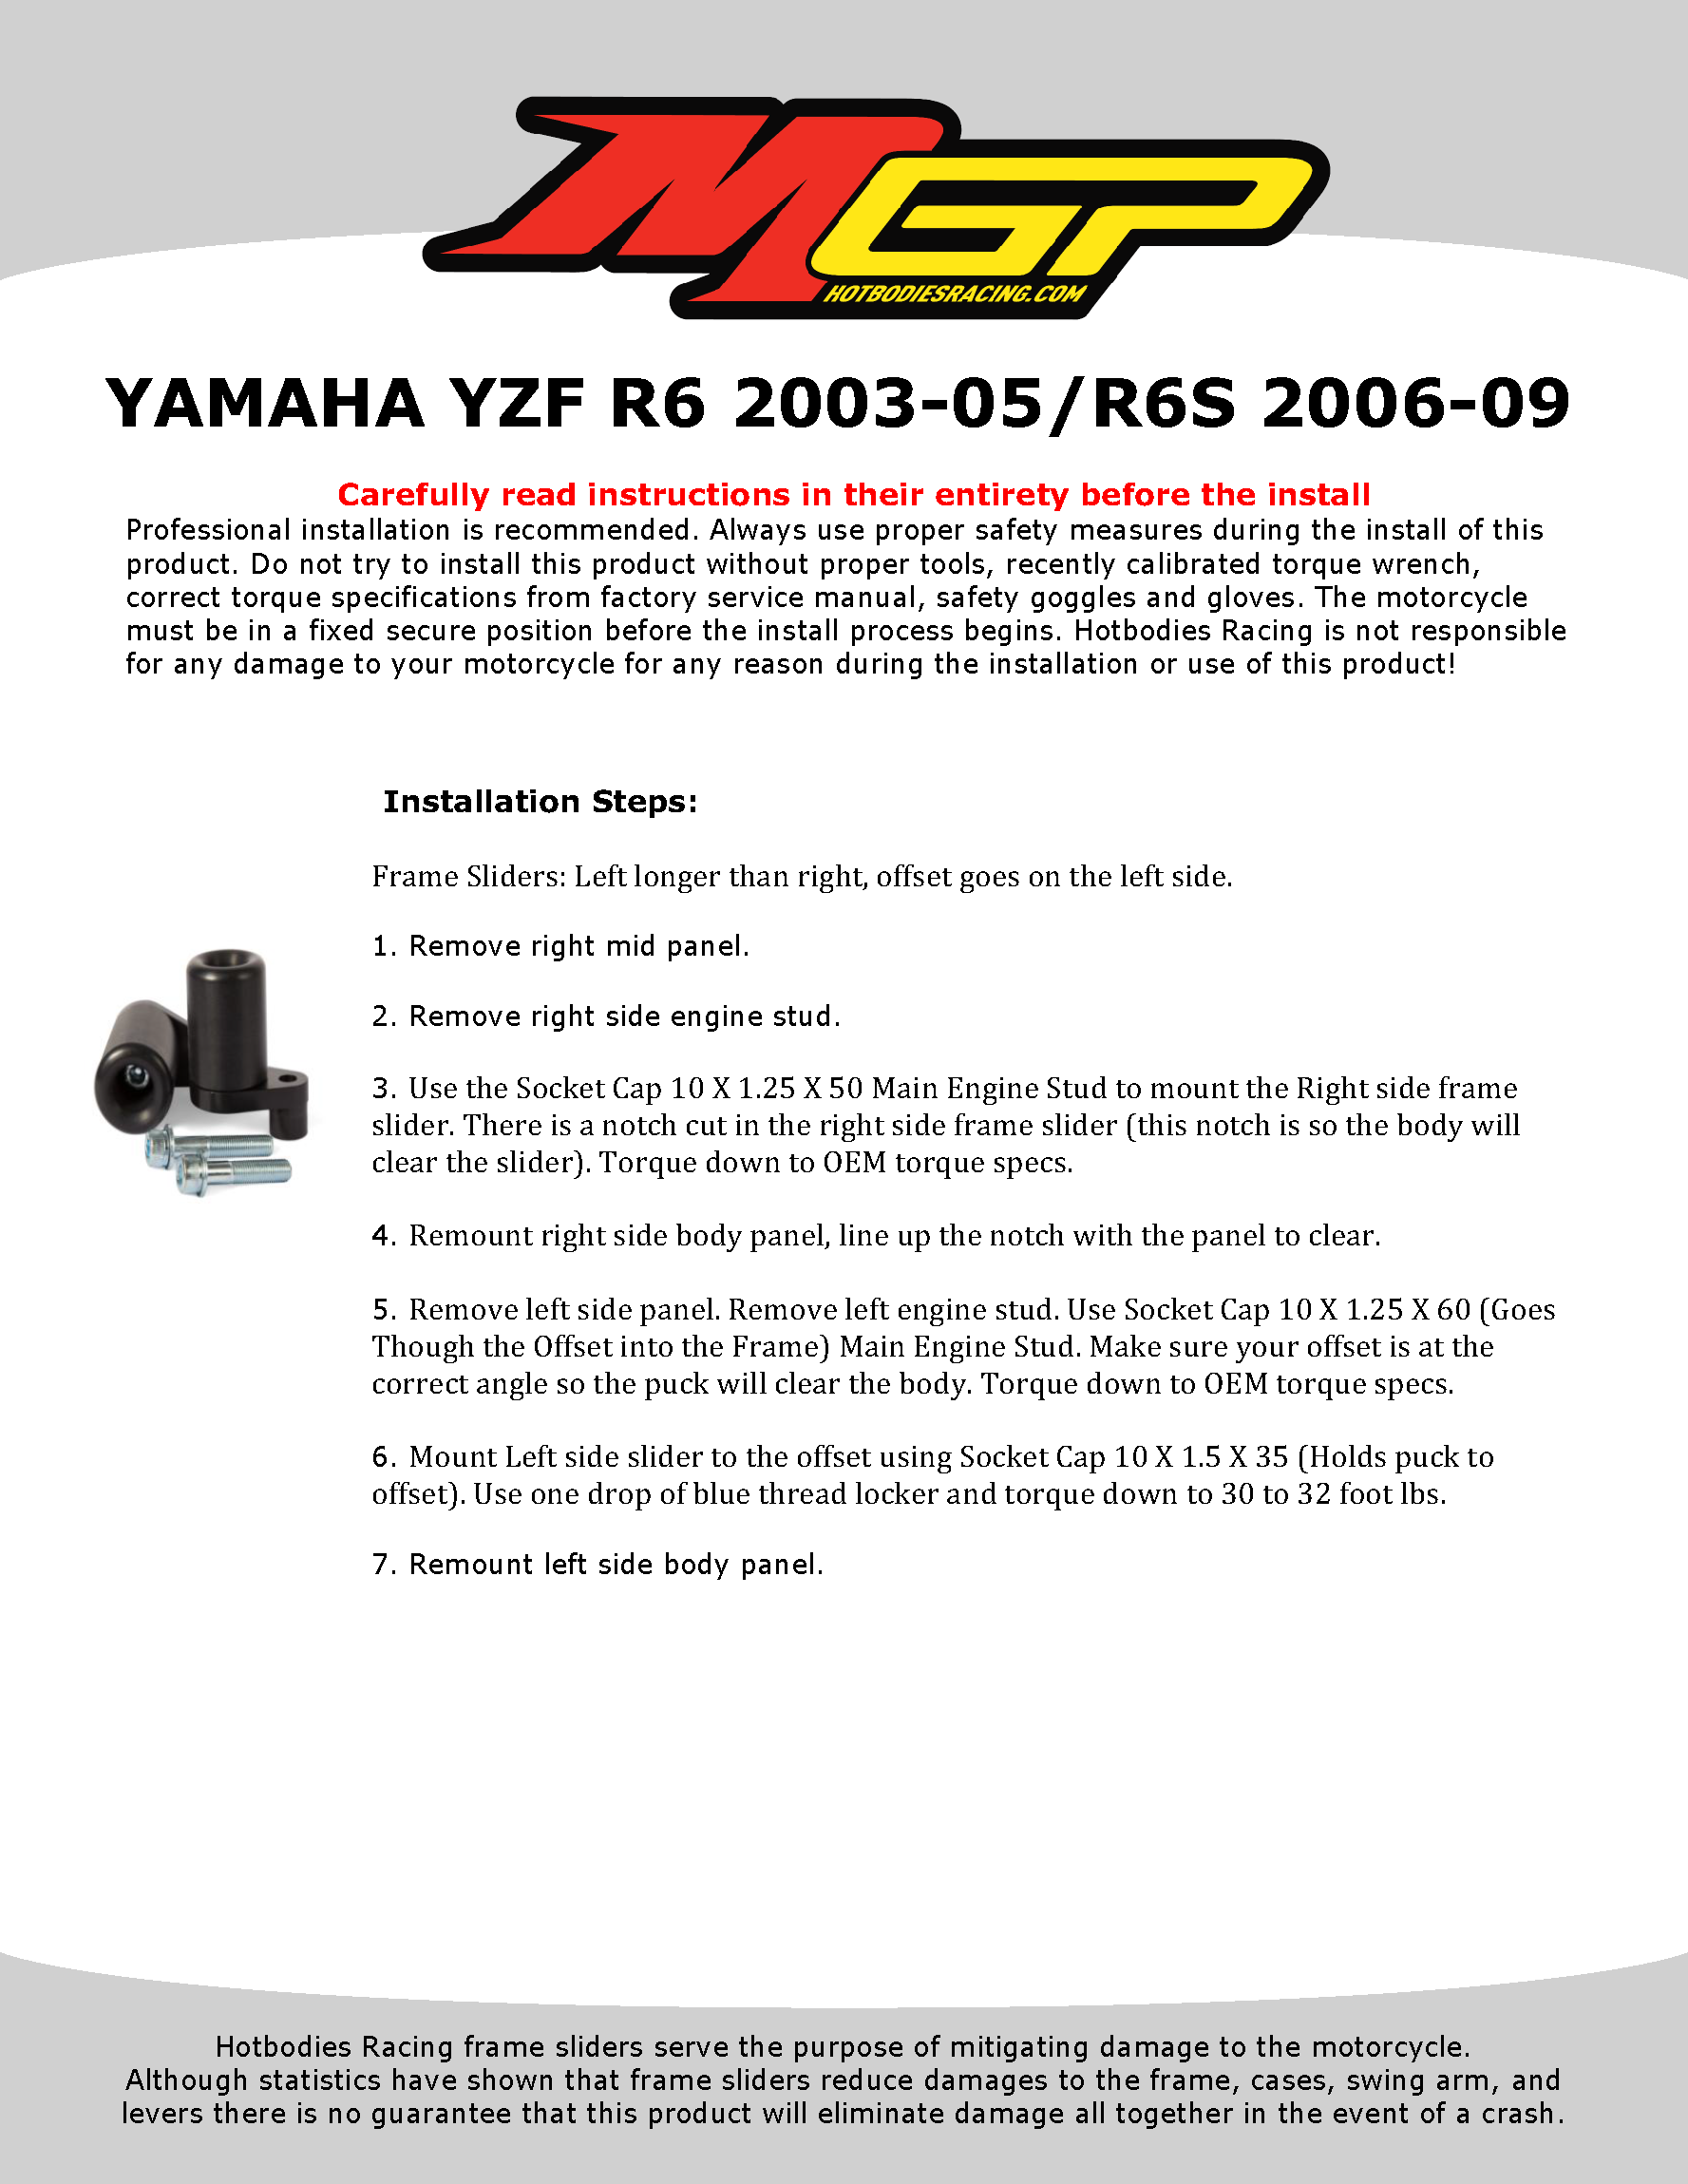 

YAMAHA YZF R6 2003-05/R6S 2006-09 Installation

